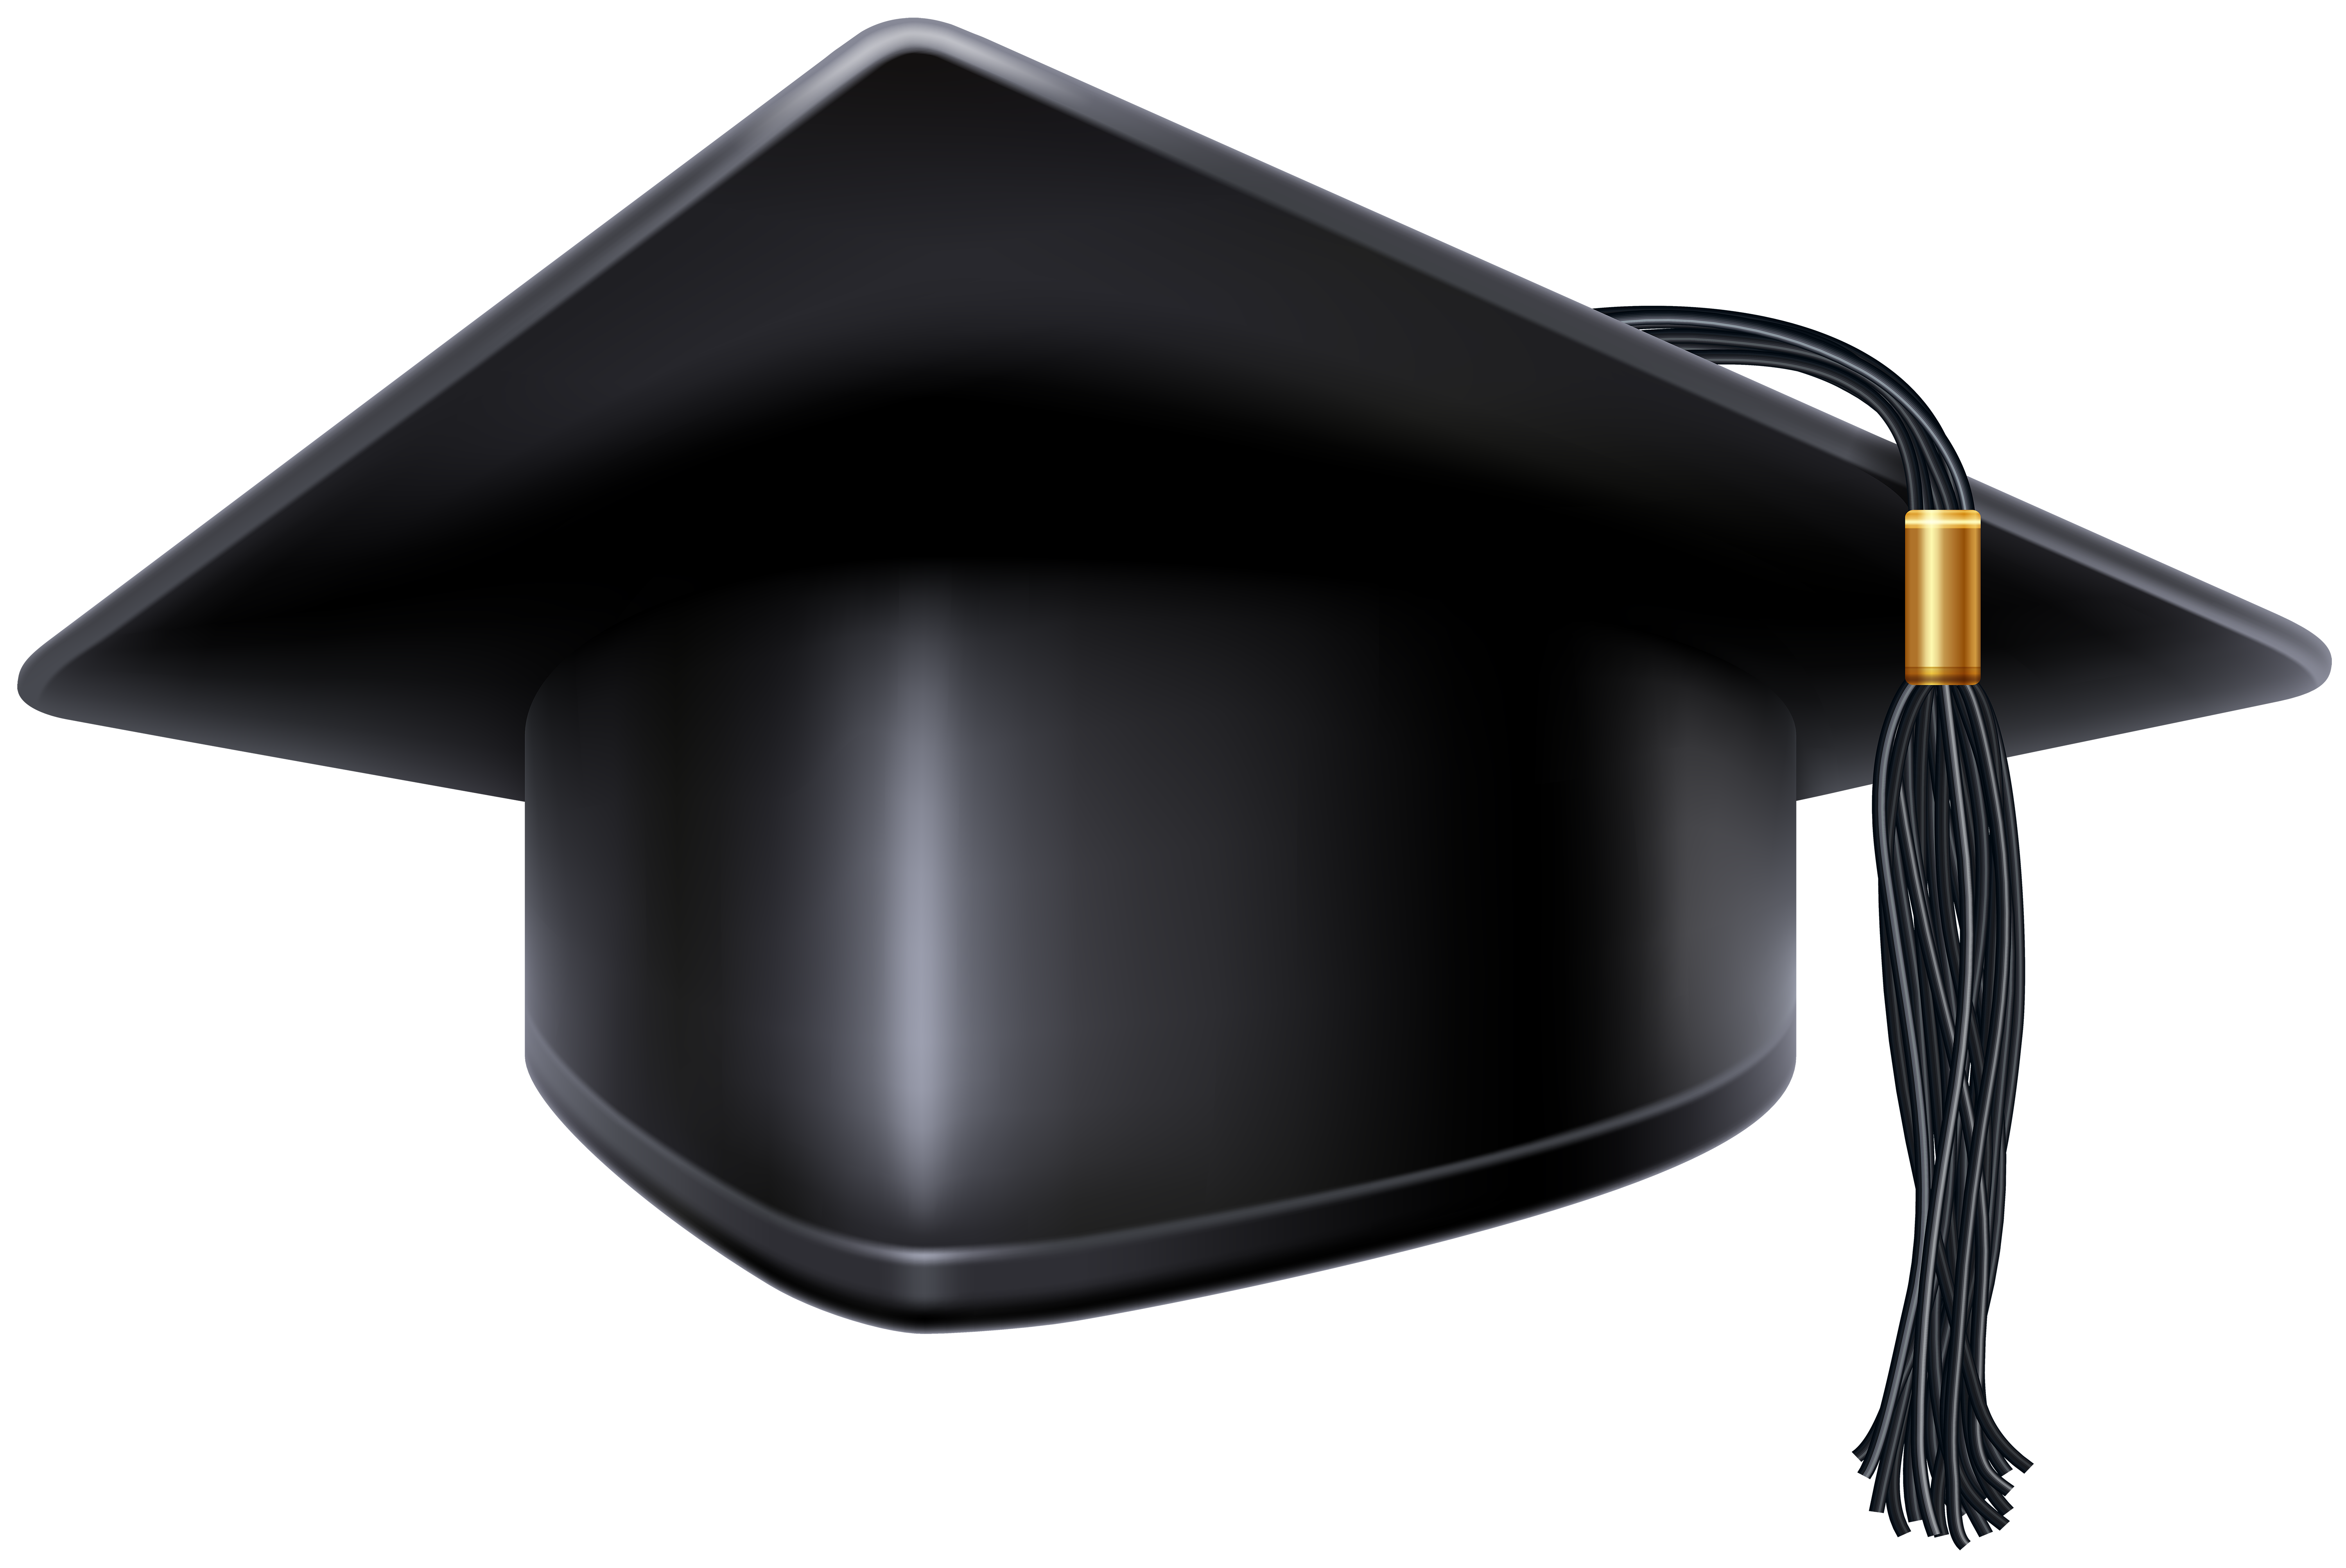 graduate clipart doctorate degree